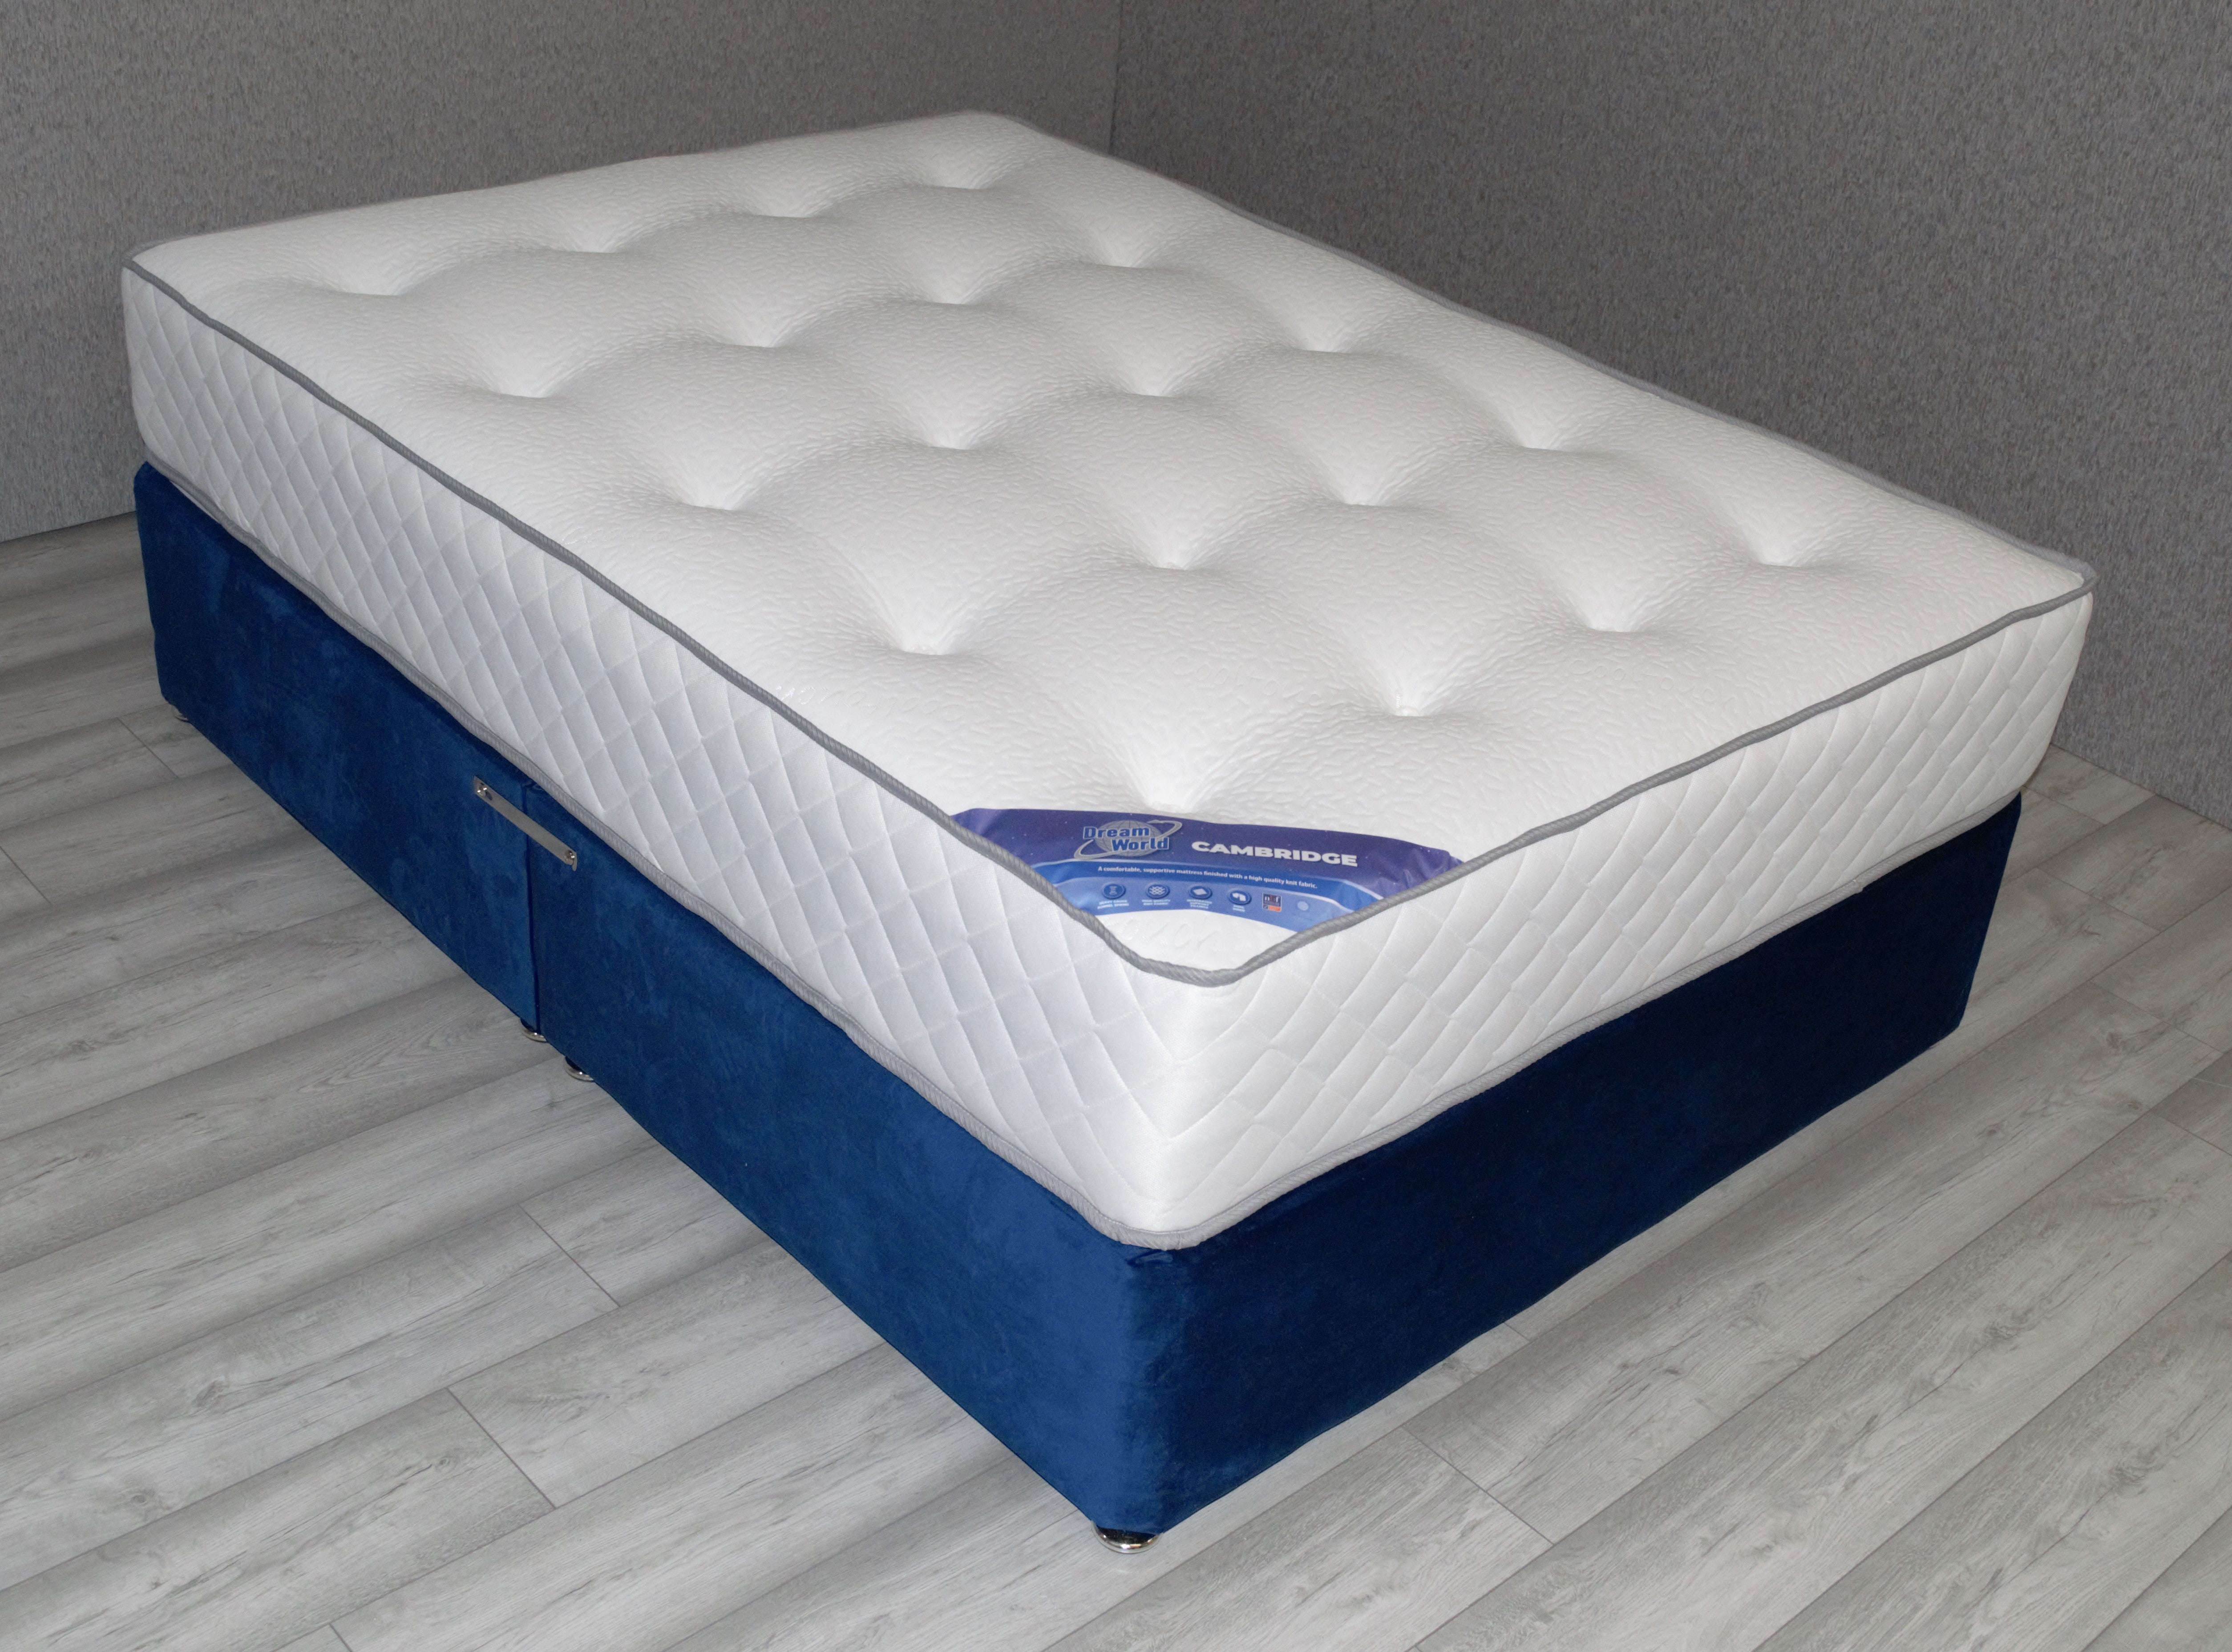 cambridge home king mattress pads at bed bath